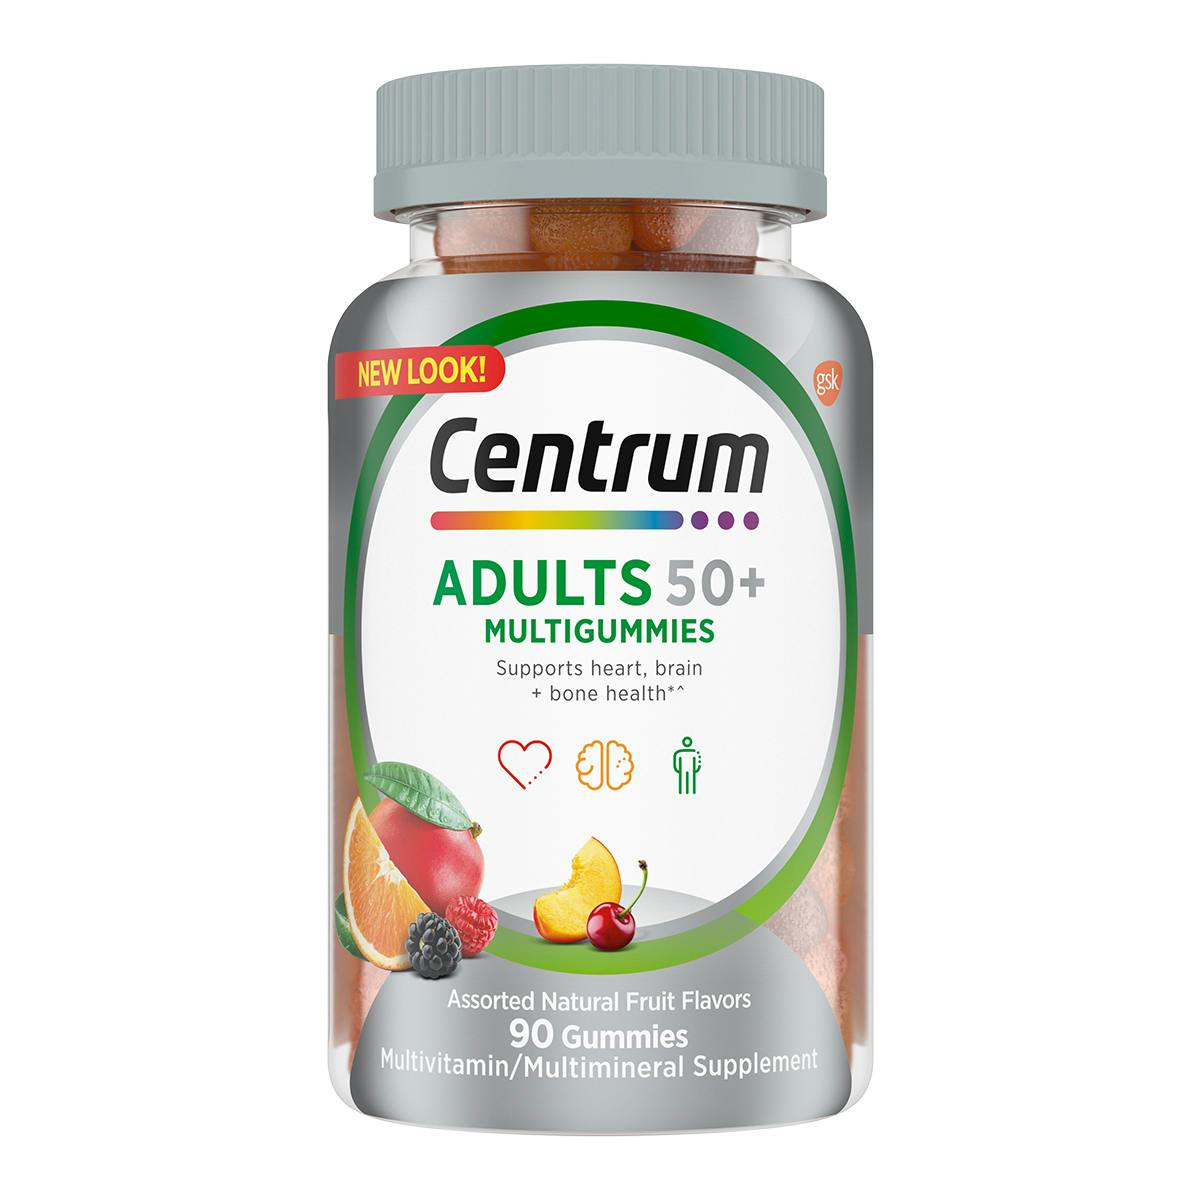 Bottle of Centrum Multigummies Adults 50plus